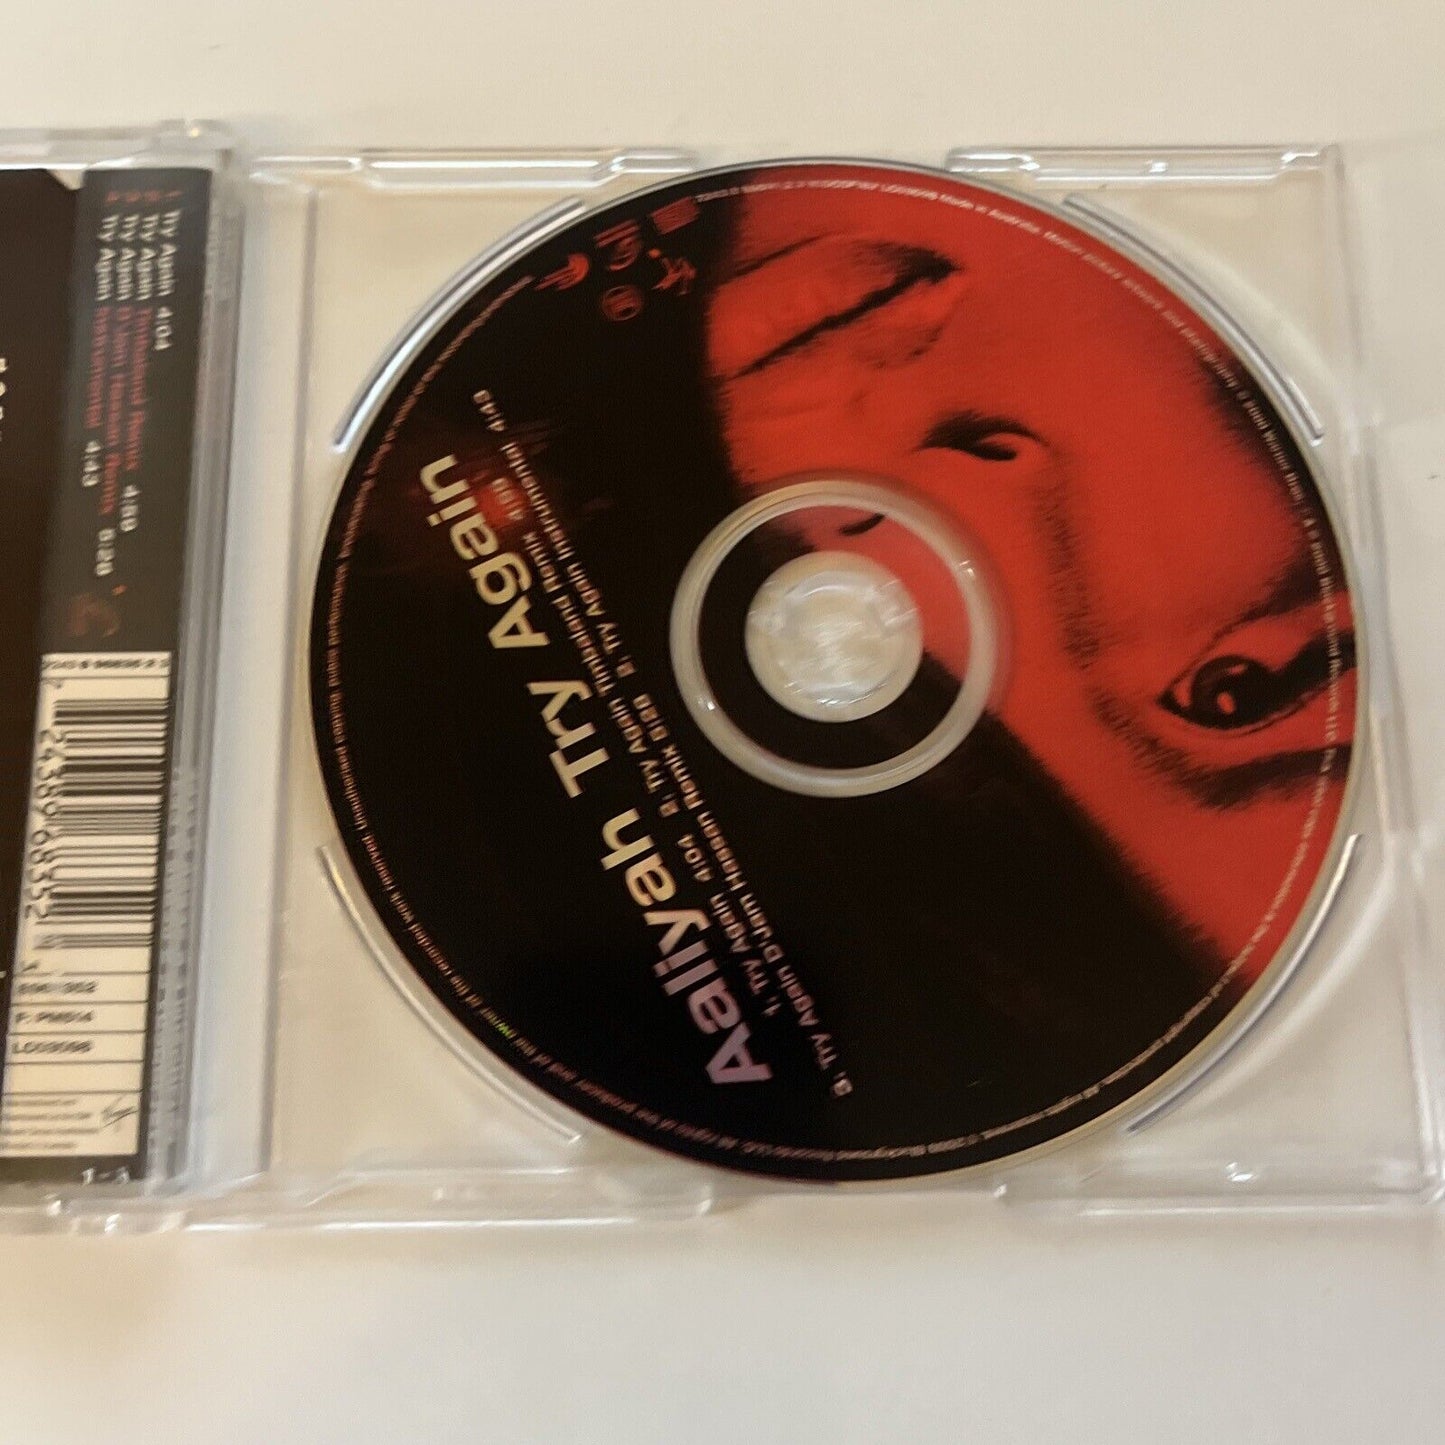 Aaliyah - Try Again (CD, 2000)